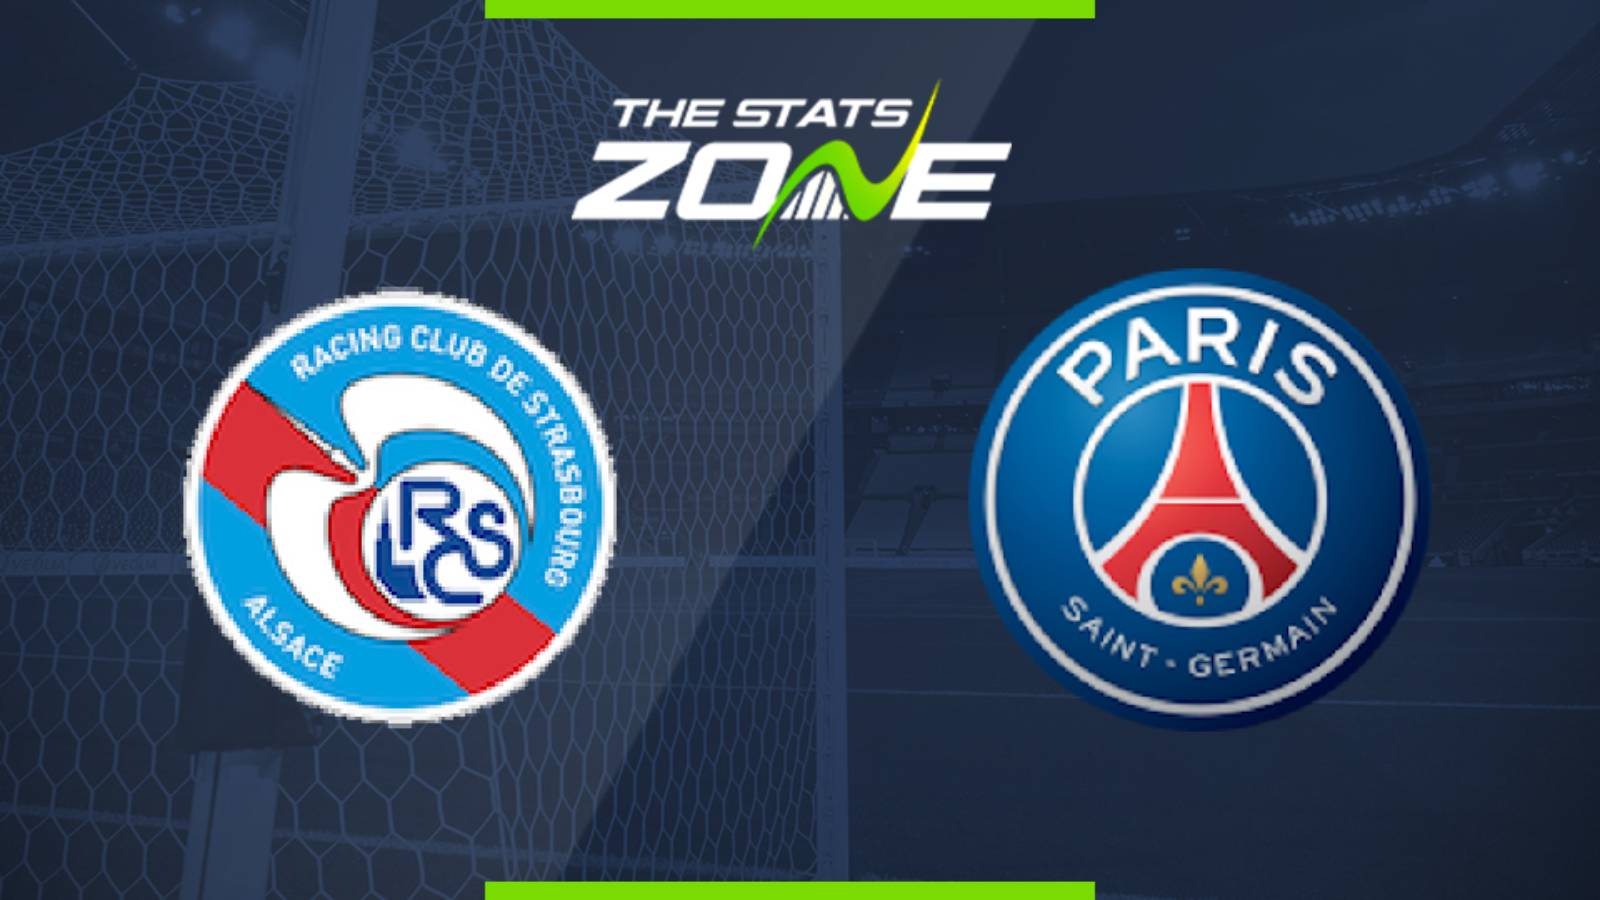 2019 20 Ligue 1 Strasbourg Vs Psg Preview Prediction The Stats Zone [ 900 x 1600 Pixel ]